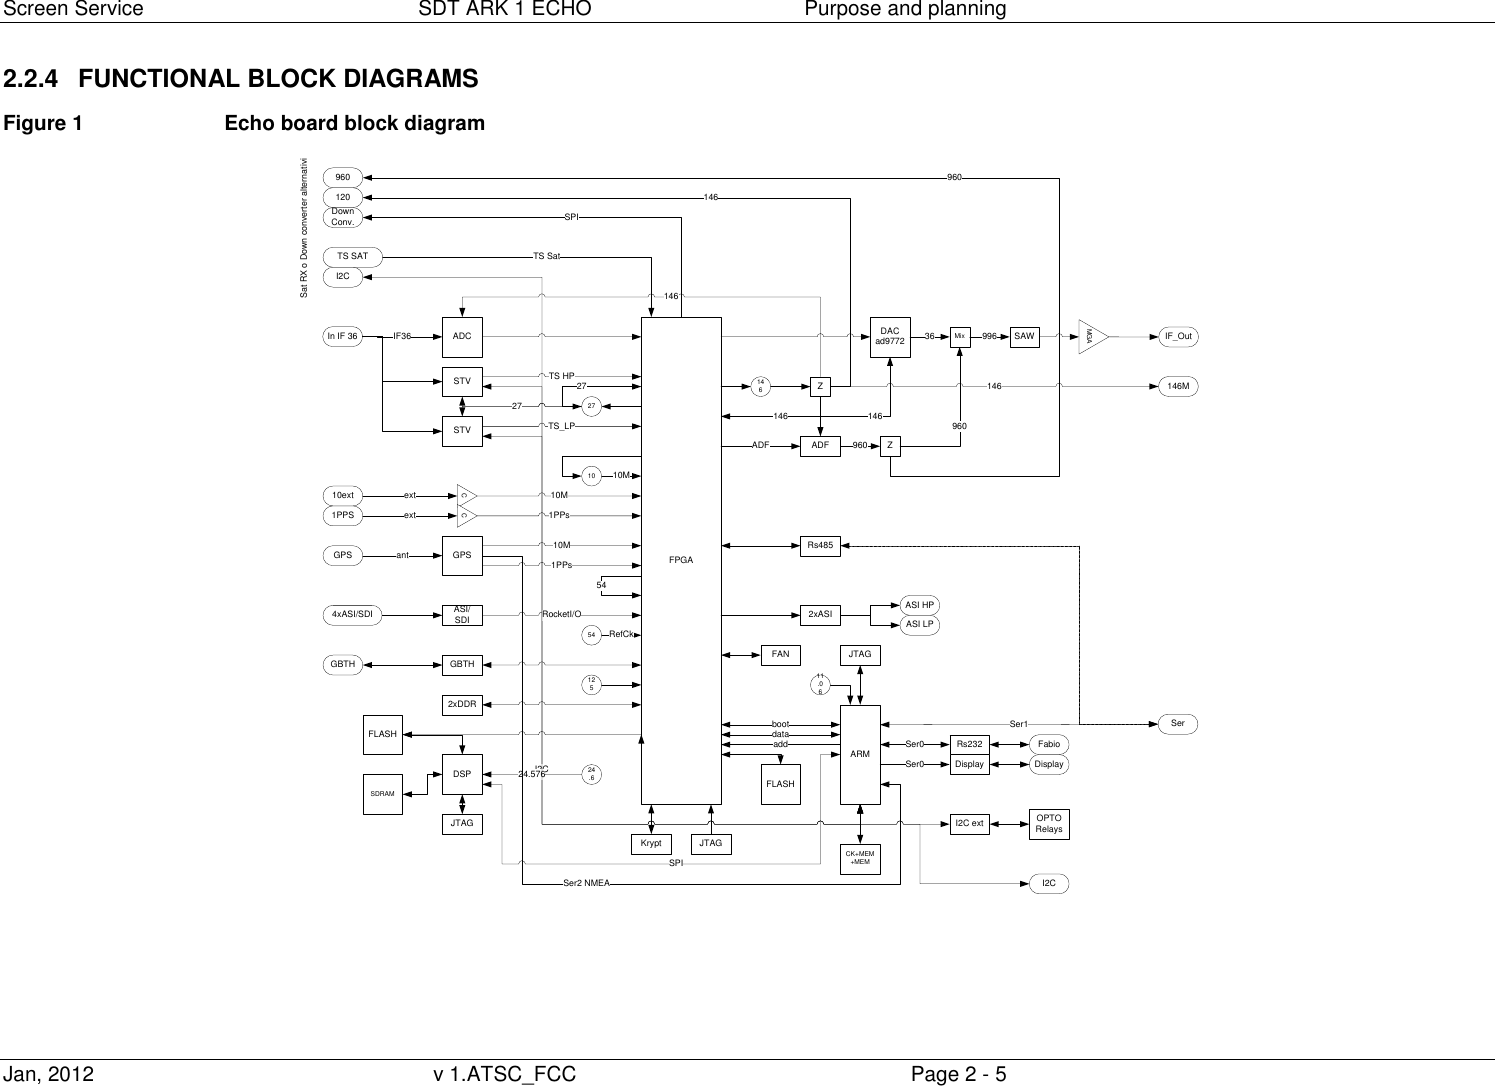 Screen Service  SDT ARK 1 ECHO  Purpose and planning Jan, 2012  v 1.ATSC_FCC  Page 2 - 5 2.2.4  FUNCTIONAL BLOCK DIAGRAMS Figure 1    Echo board block diagram 4xASI/SDIFPGA125FLASHARMDACad9772GBTH2xDDRASI/SDIADCGBTHIn IF 36146STVSTVIF362727KryptI2CDSPJTAGJTAGJTAG11.0624.576SDRAM2xASI ASI HPASI LPADF ZZ146960146Mix36 996 SAWMGA960146146960146TS HPTS_LP12010bootadddataADF10ext1PPSC Cextext10M10M1PPsRocketI/O54 RefCk960Ser1SPI CK+MEM+MEMTS SATI2CTS SatGPSGPS ant 10M1PPsSer2 NMEA54DisplaySer0Rs232 FabioSer0Rs485I2C ext OPTORelays                     FLASHDisplayFANSPIDown Conv.I2CSat RX o Down converter alternativi27IF_Out146MSer24.6      